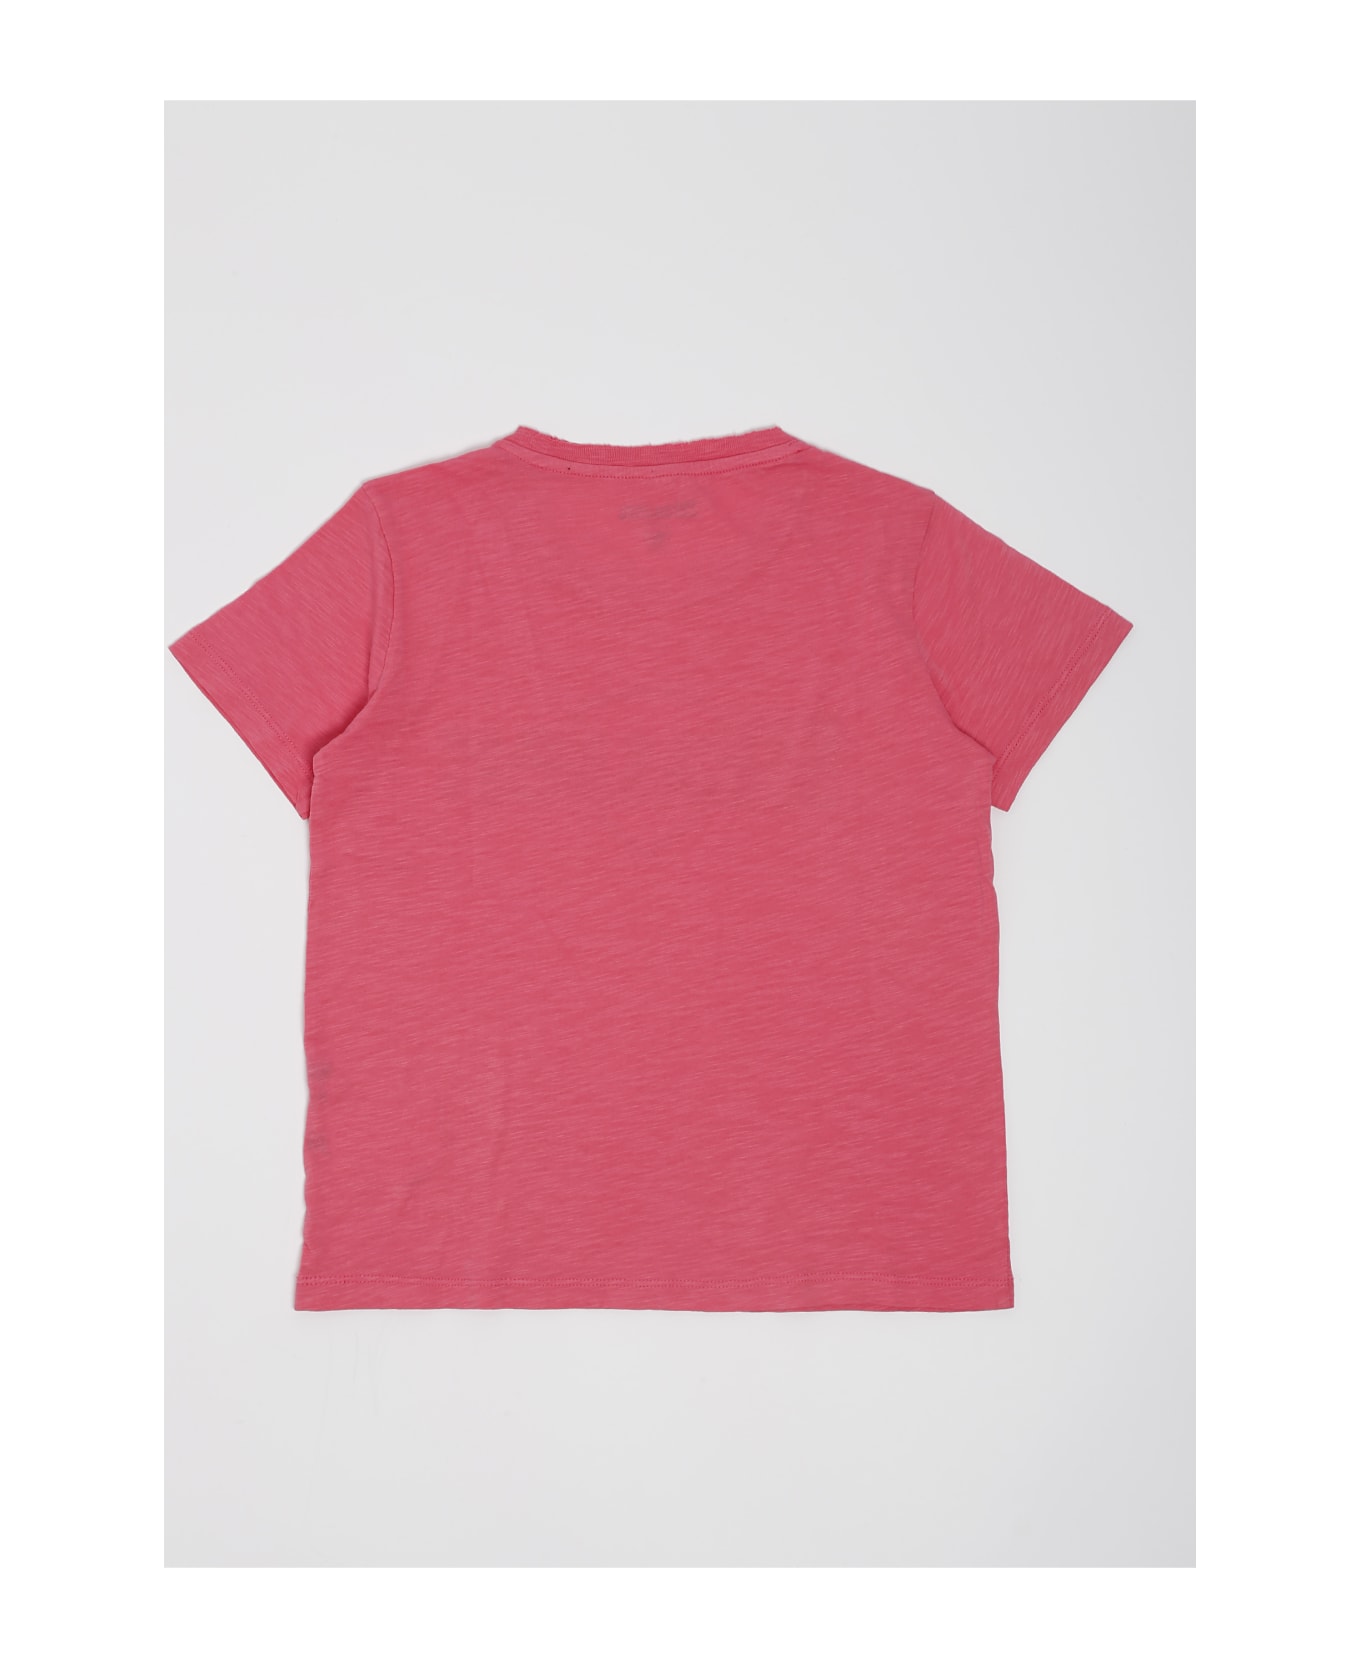 Blauer T-shirt T-shirt - ROSA Tシャツ＆ポロシャツ